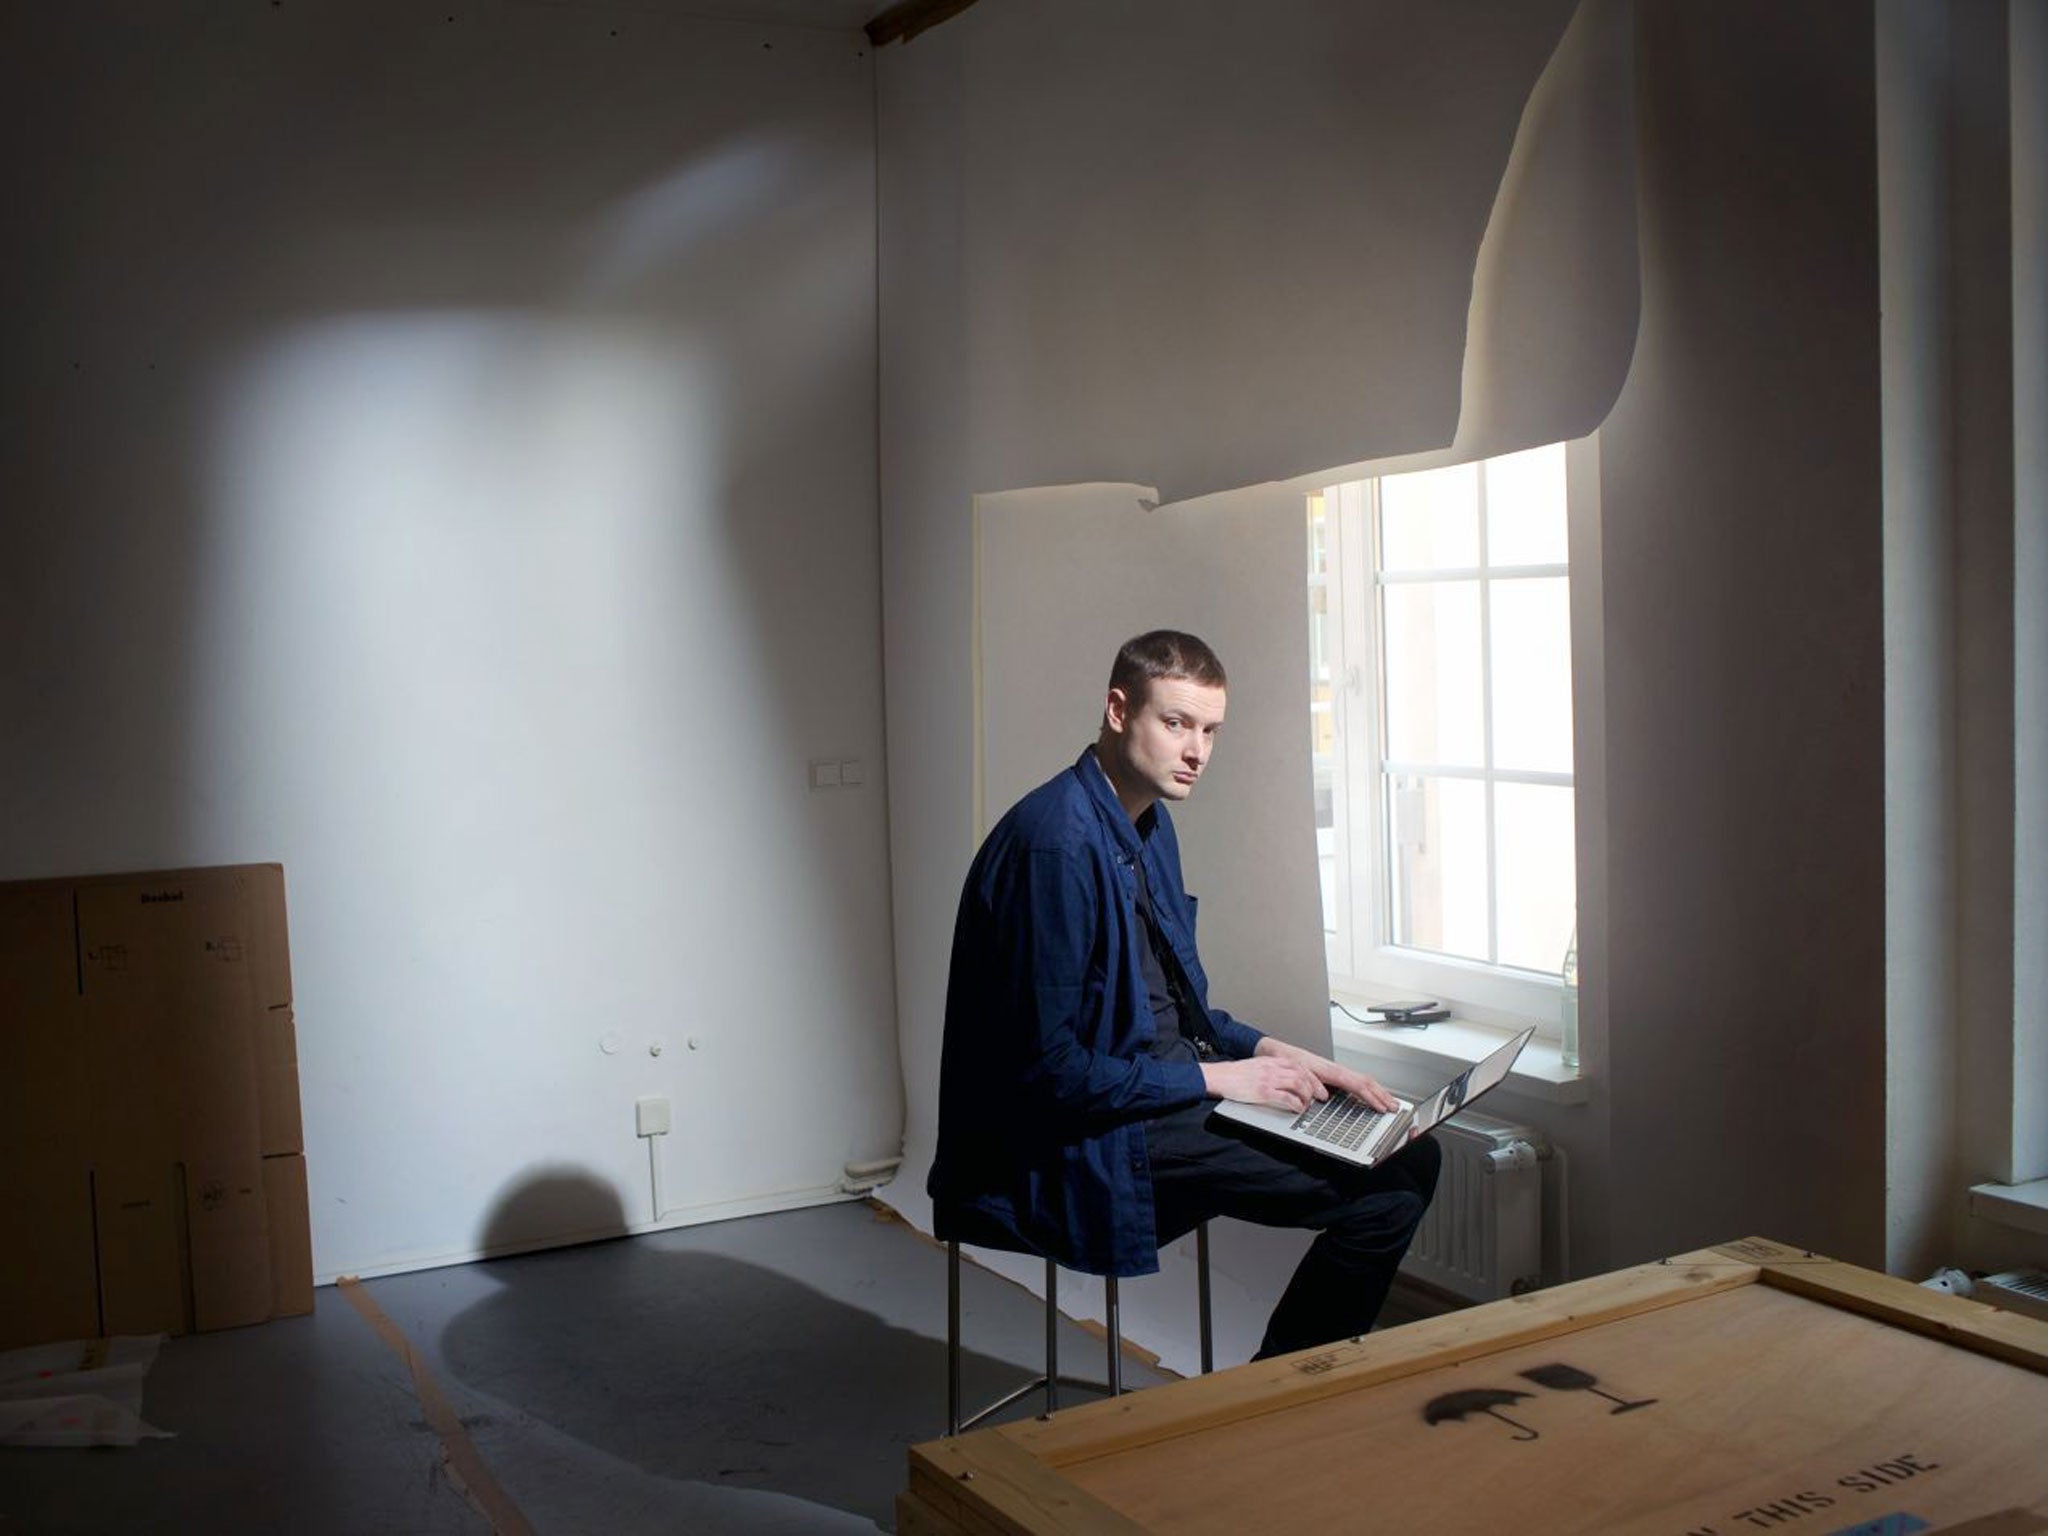 Window of opportunity: Simon Denny in his Berlin studio